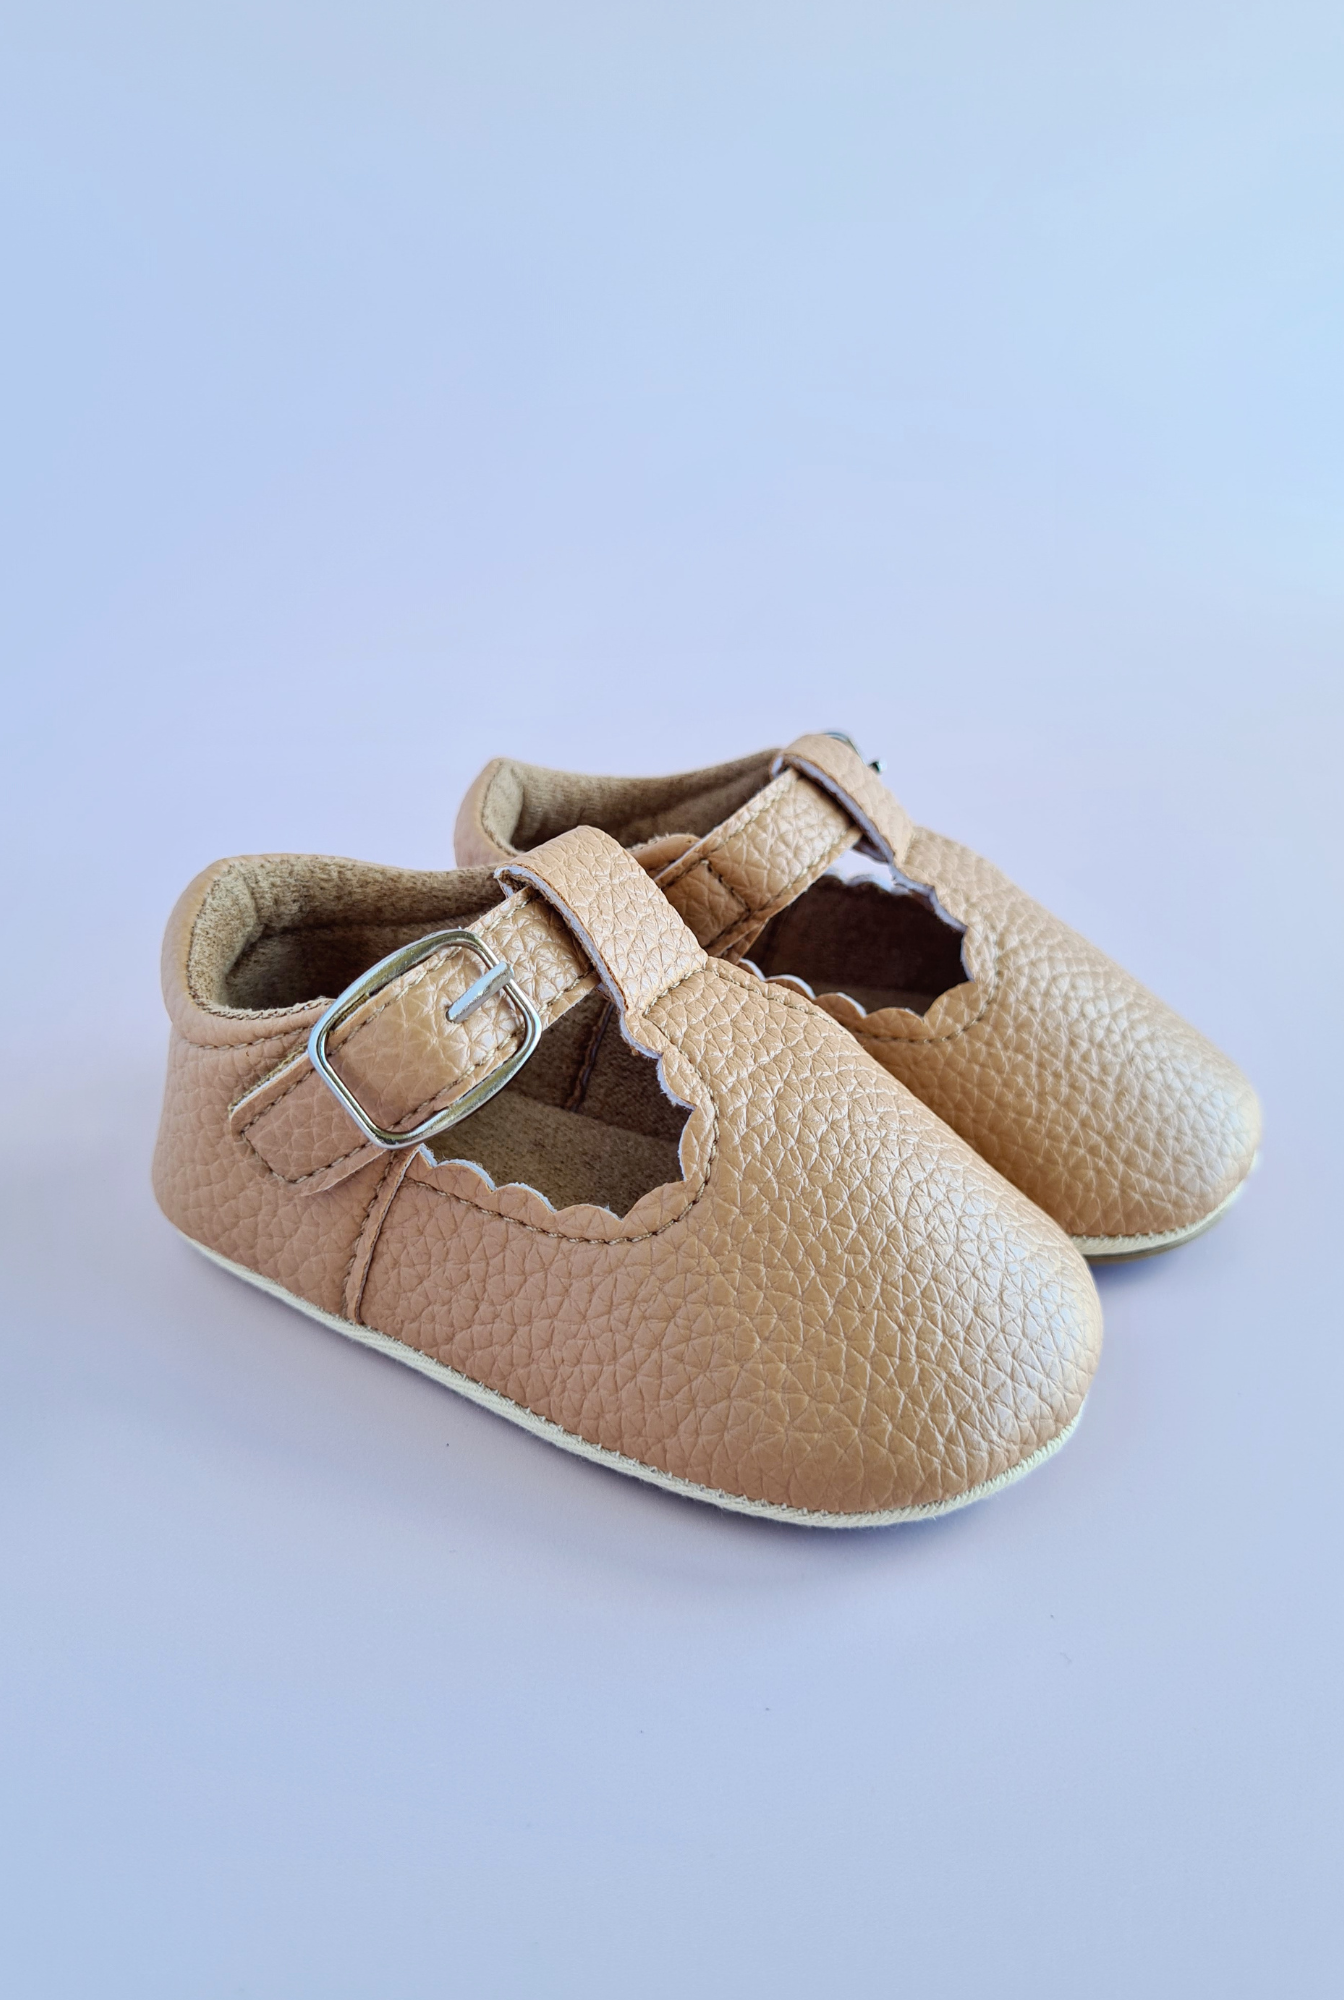 T-bar Soft Sole Baby Shoes - Ecru